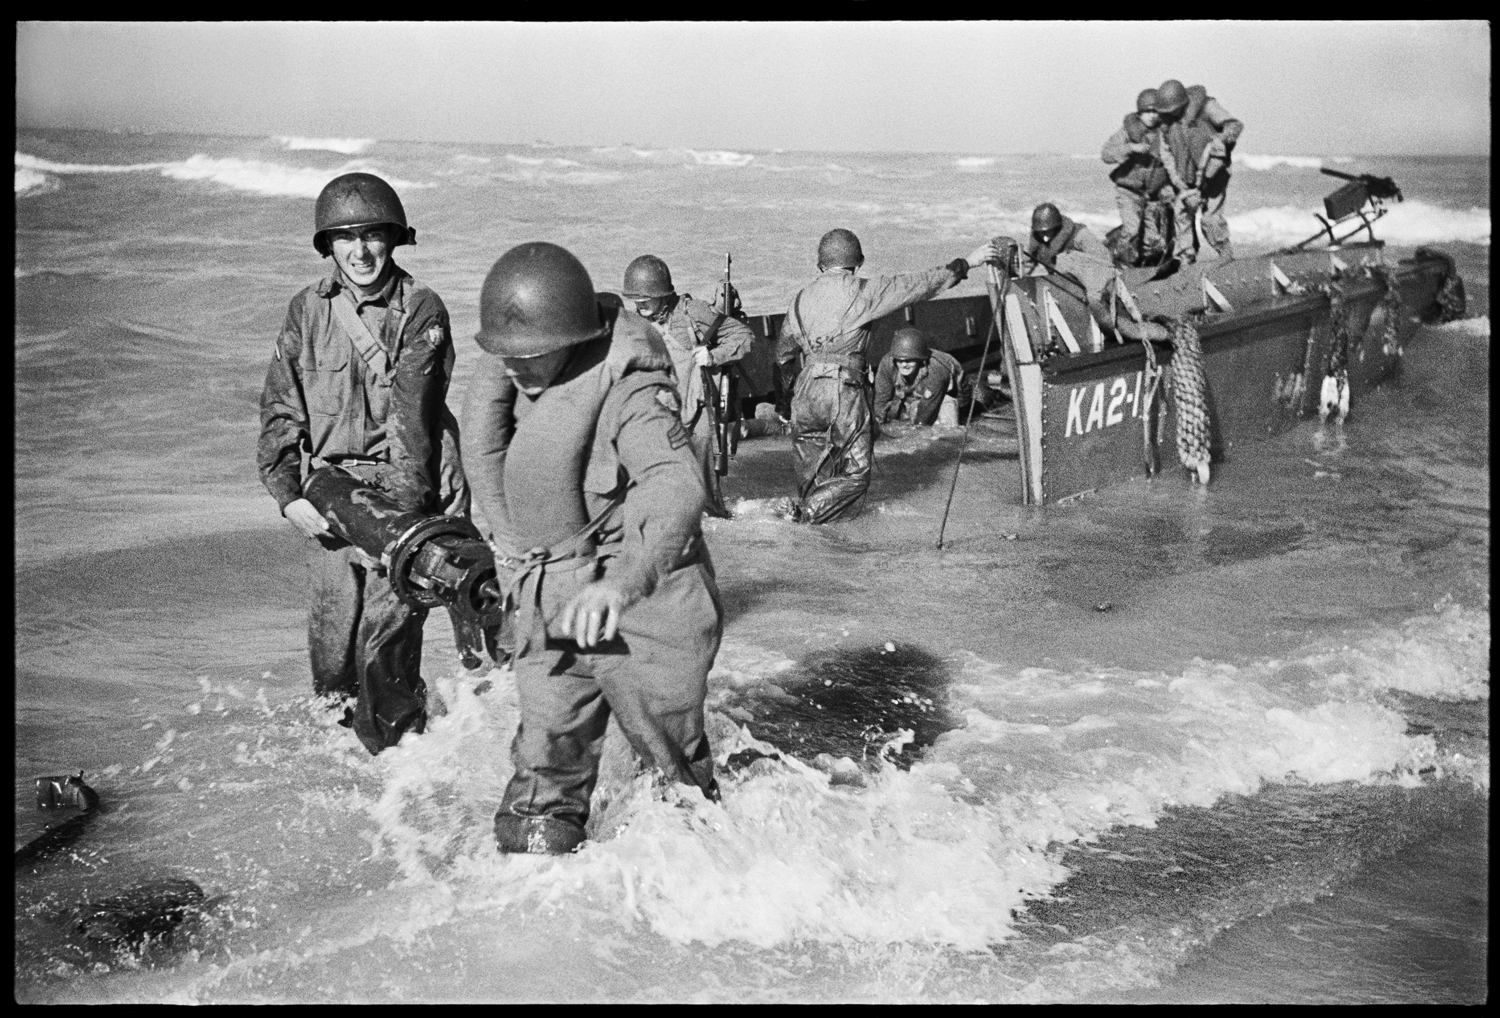 Rangers offloading onto Licata Beach, Invasion Day, July 11, 1943.